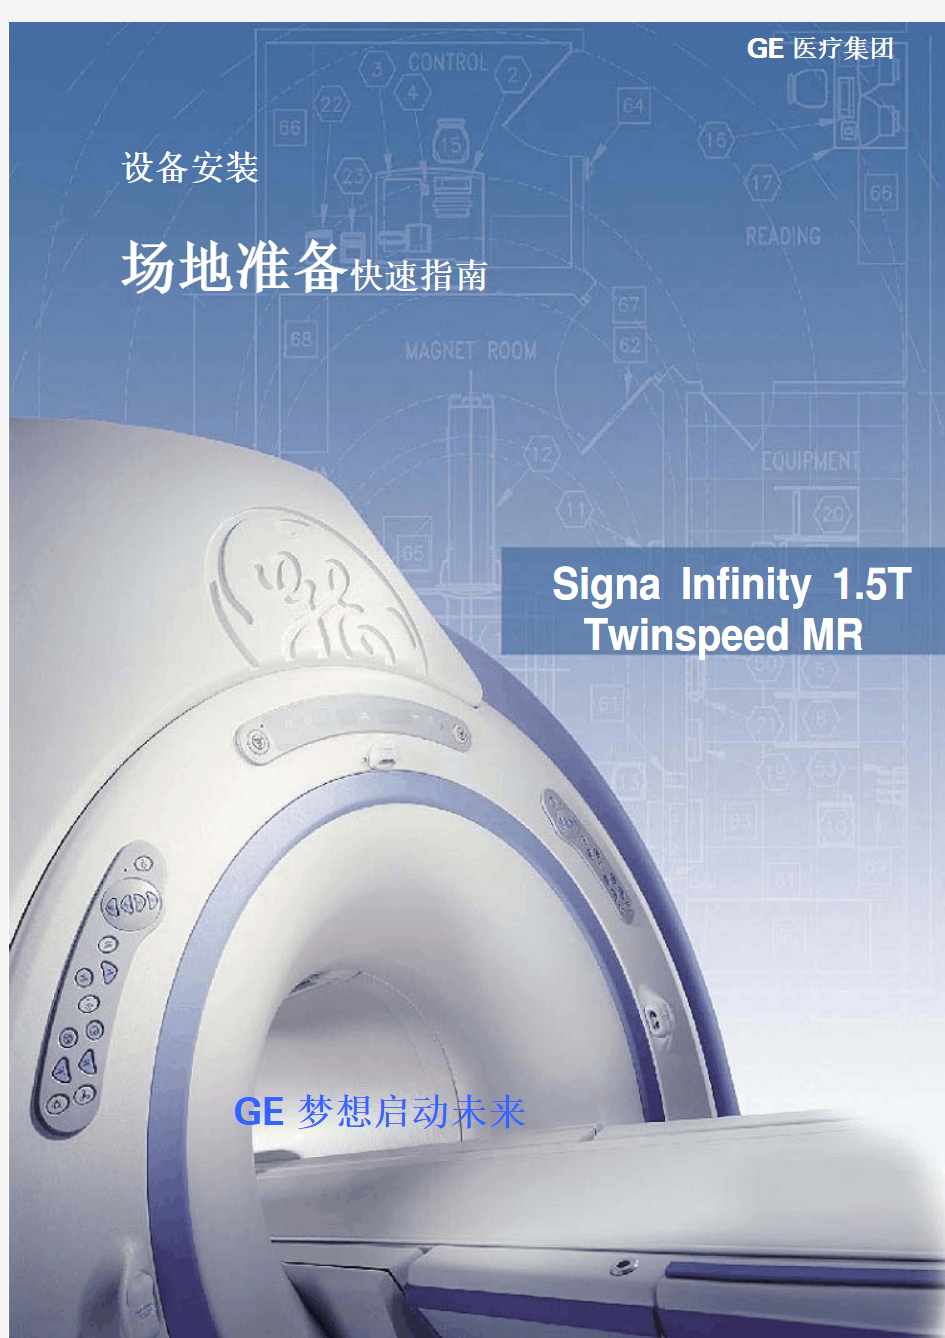 Signa Infinity 1.5T Twinspeed MR 场地准备手册